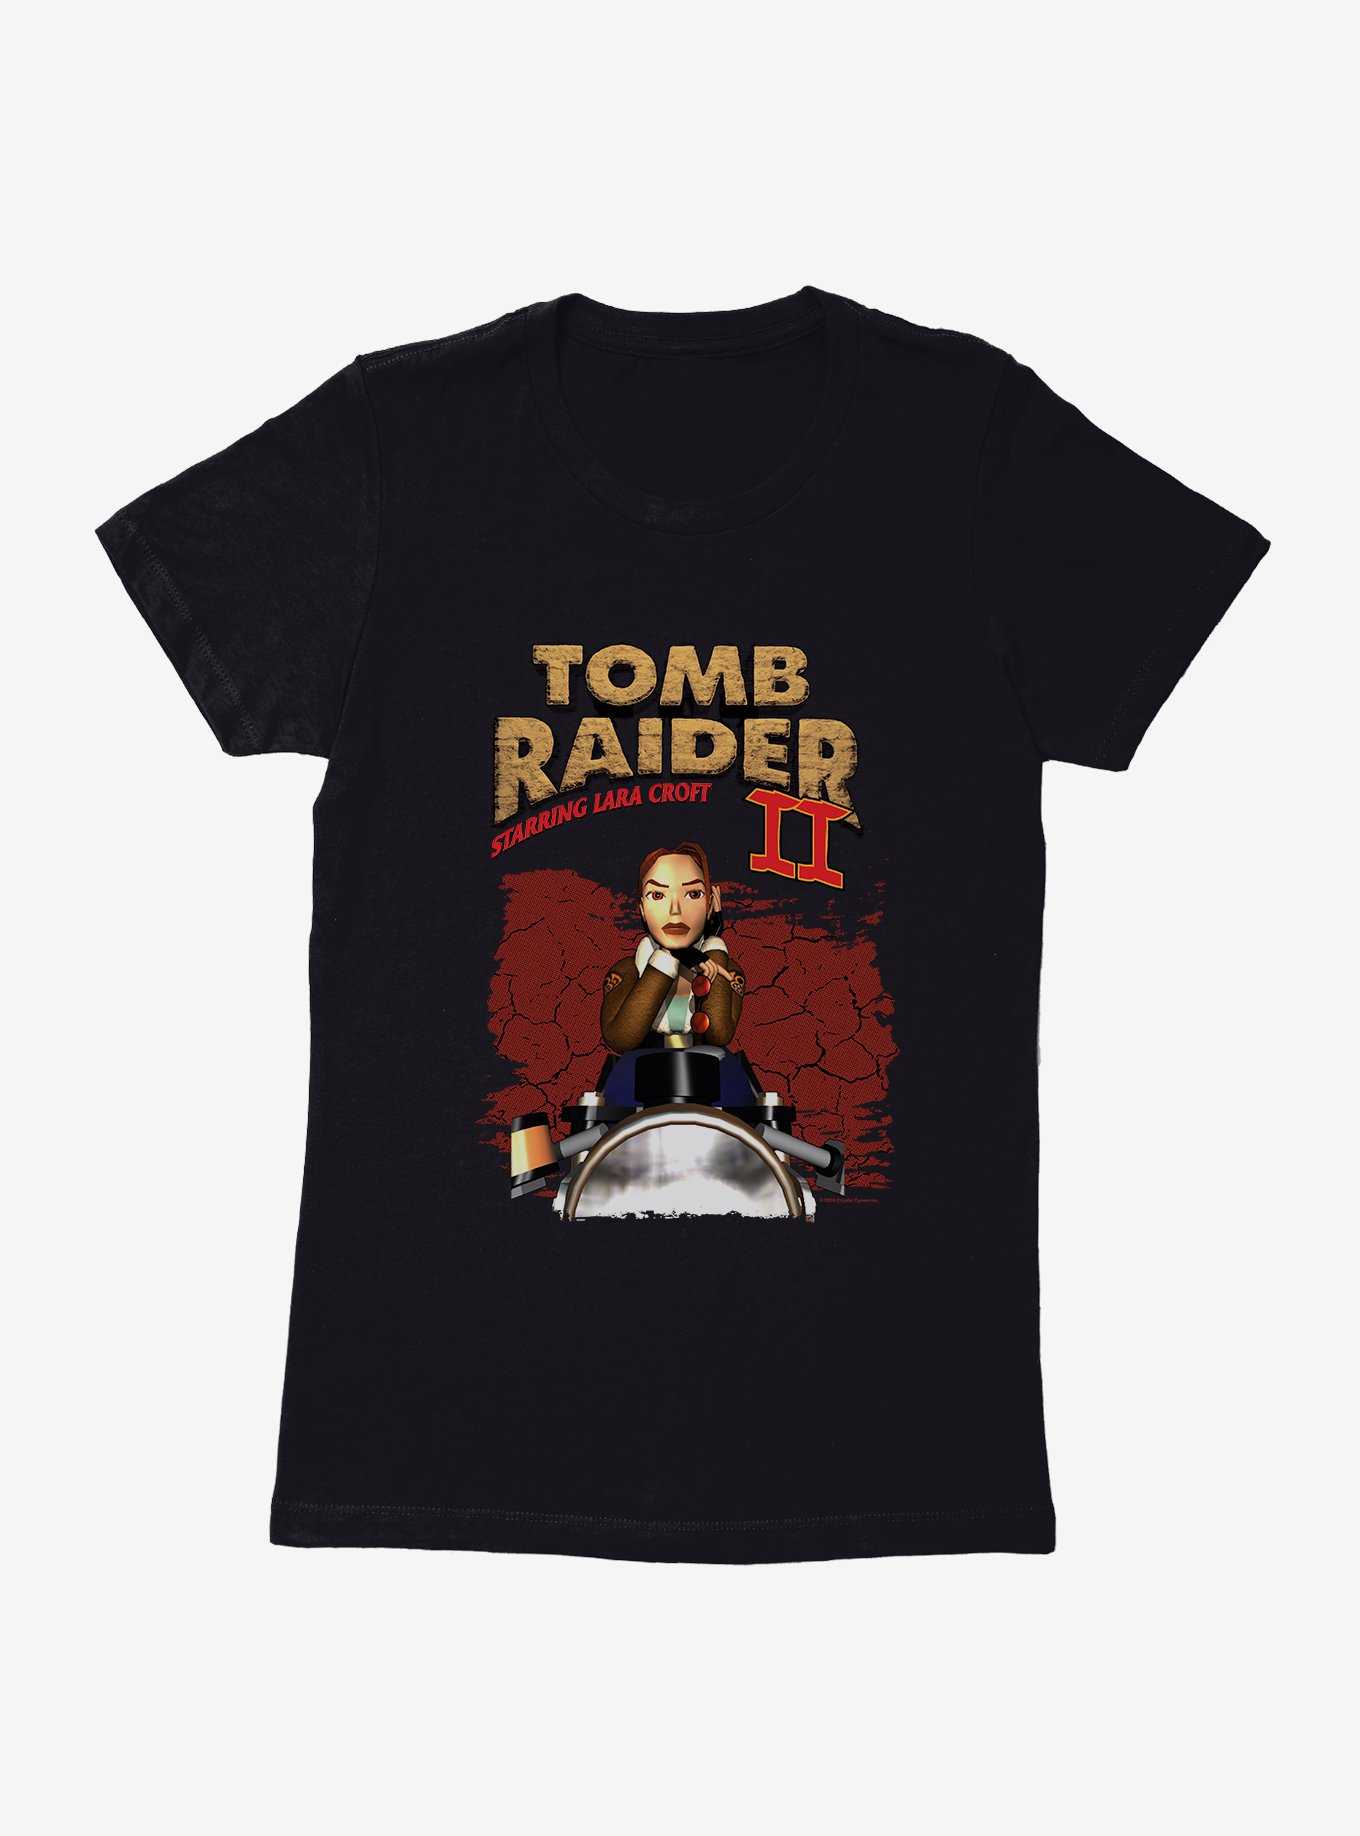 Tomb Raider II Starring Lara Croft Womens T-Shirt, , hi-res